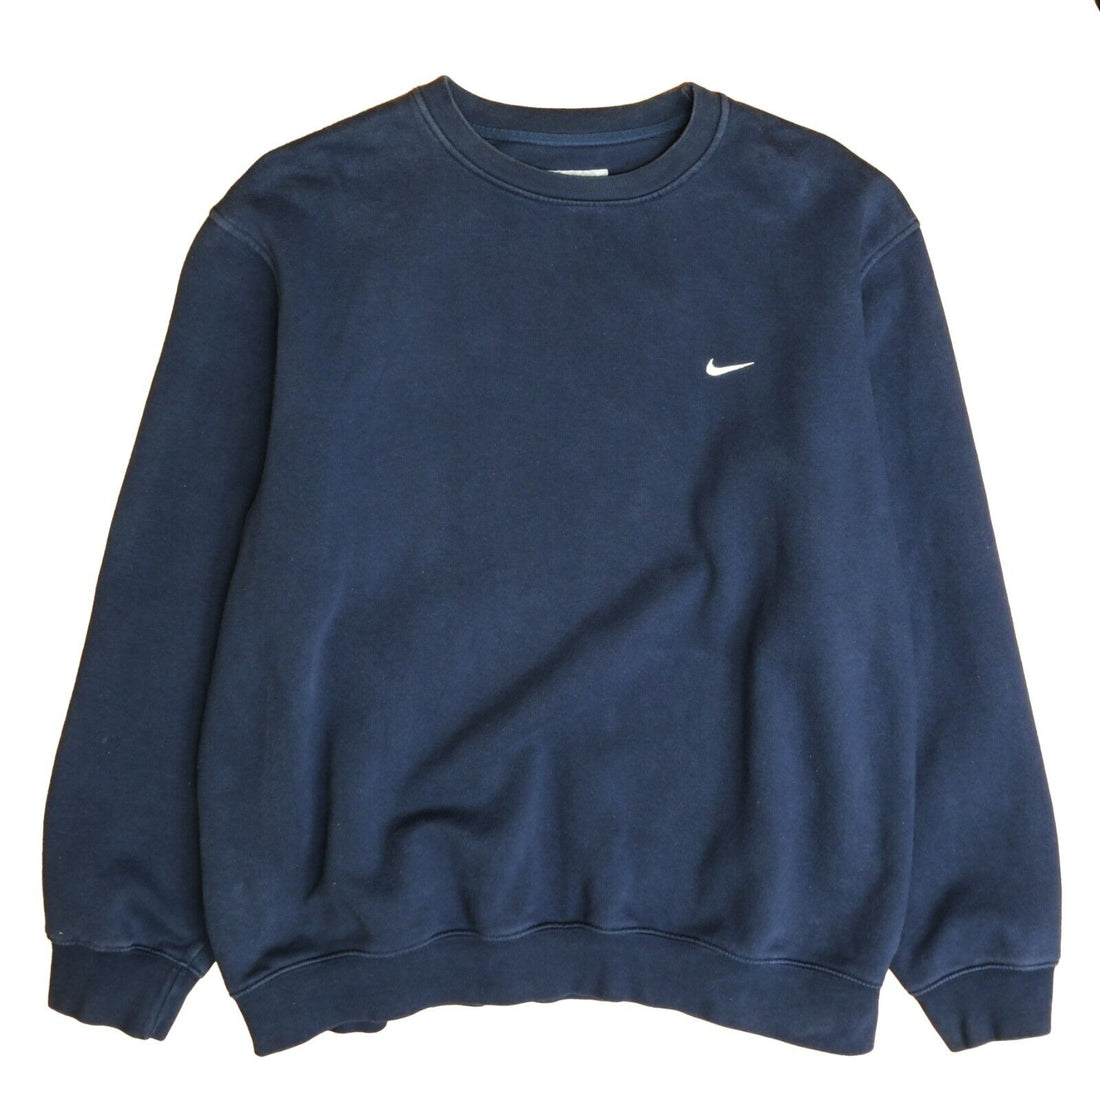 Vintage Nike Sweatshirt Crewneck Size Large Blue Embroidered Swoosh